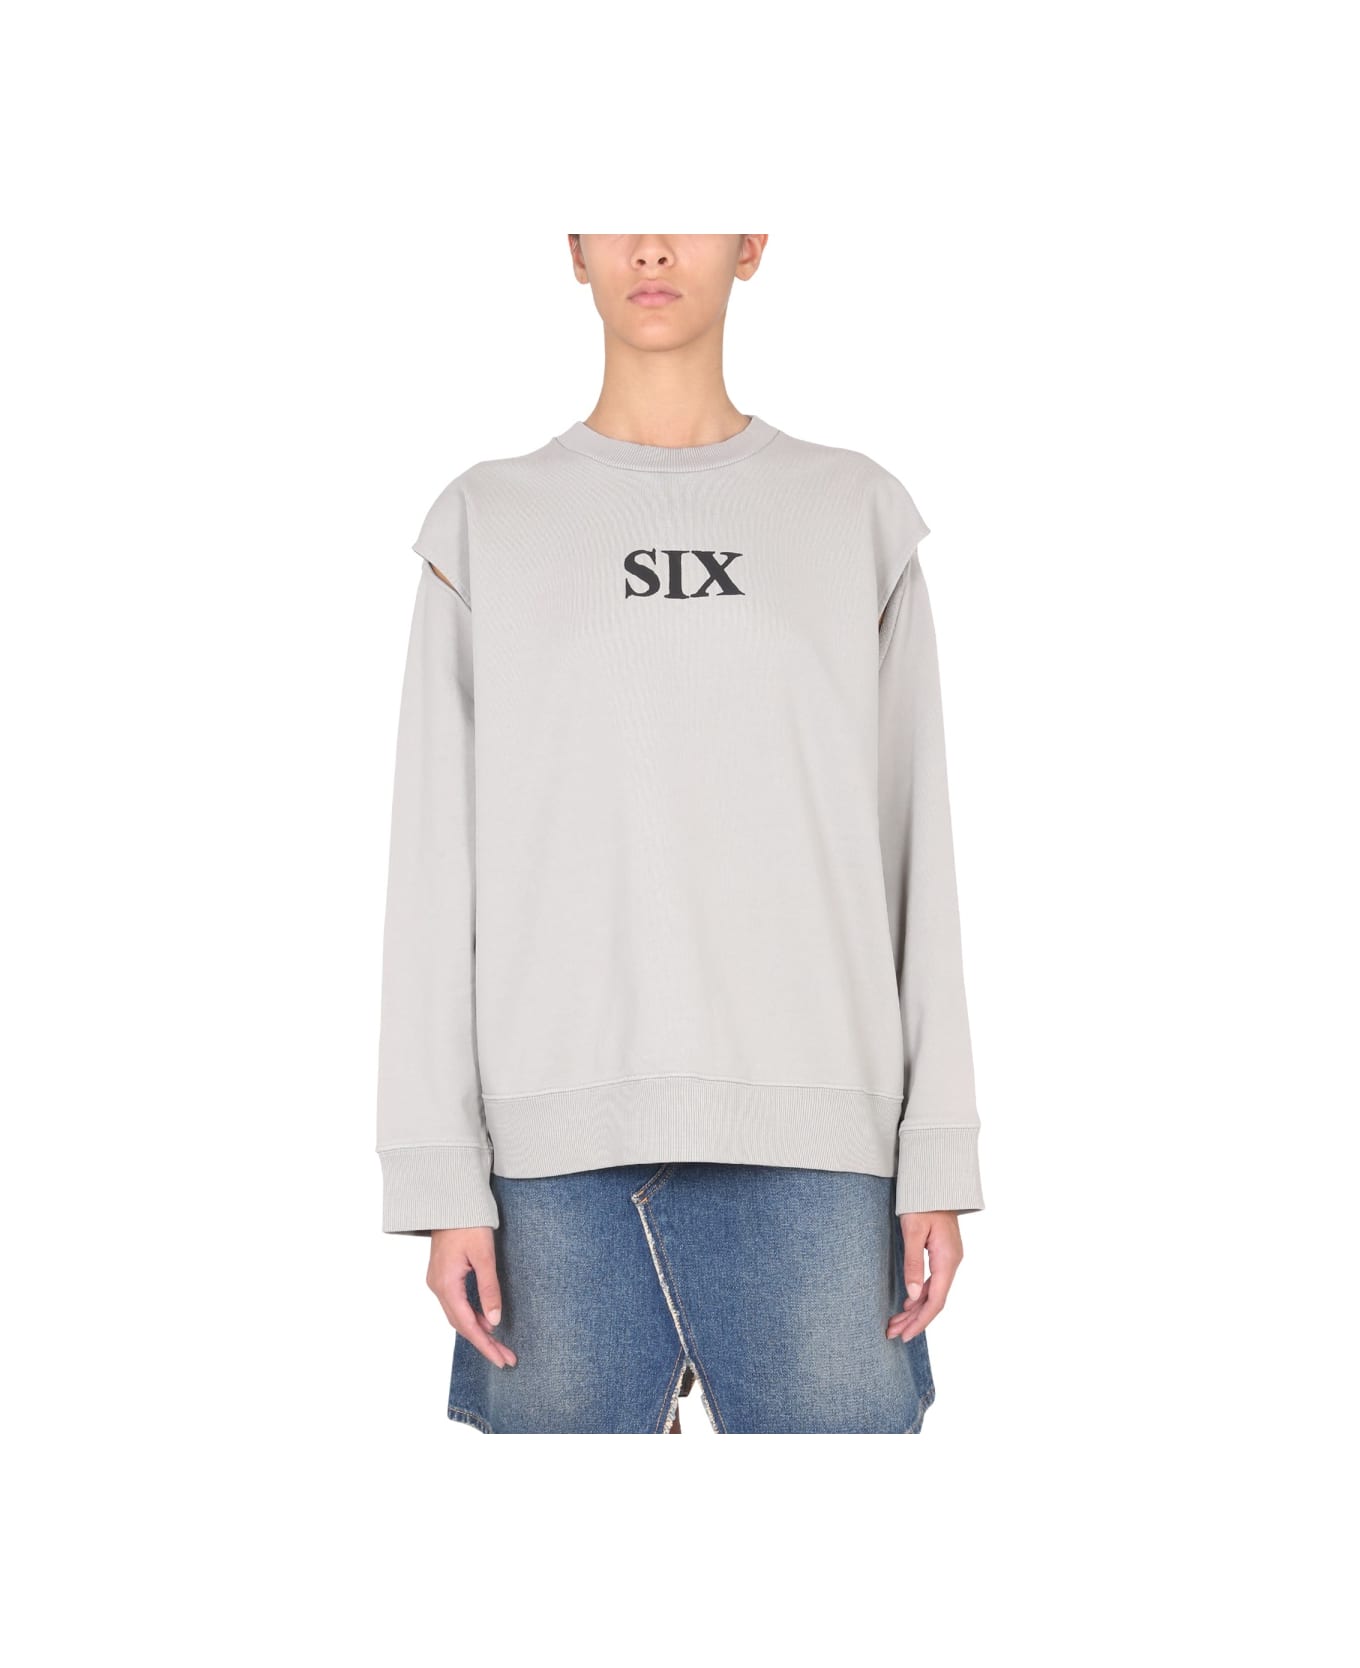 MM6 Maison Margiela Sweatshirt "six" - GREY フリース